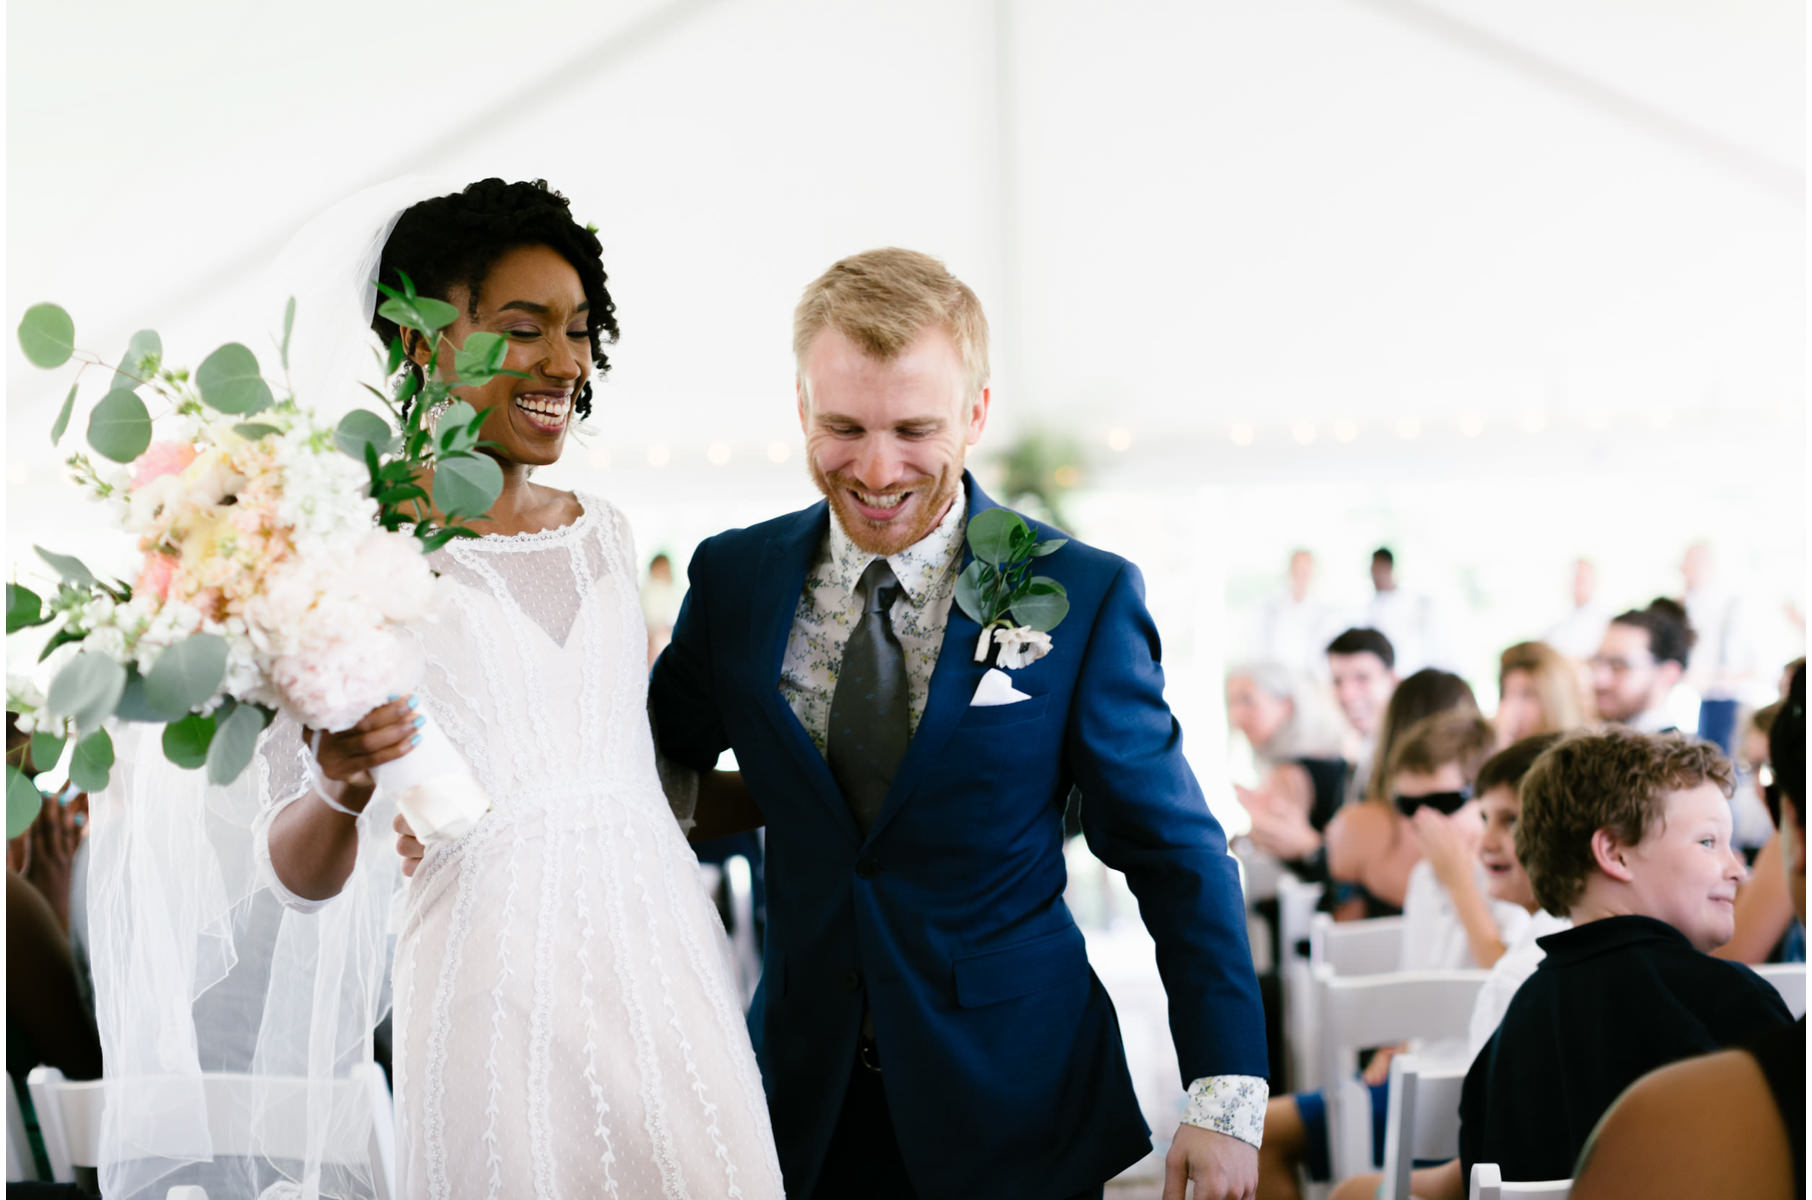 A wedding couple smile during their reception.